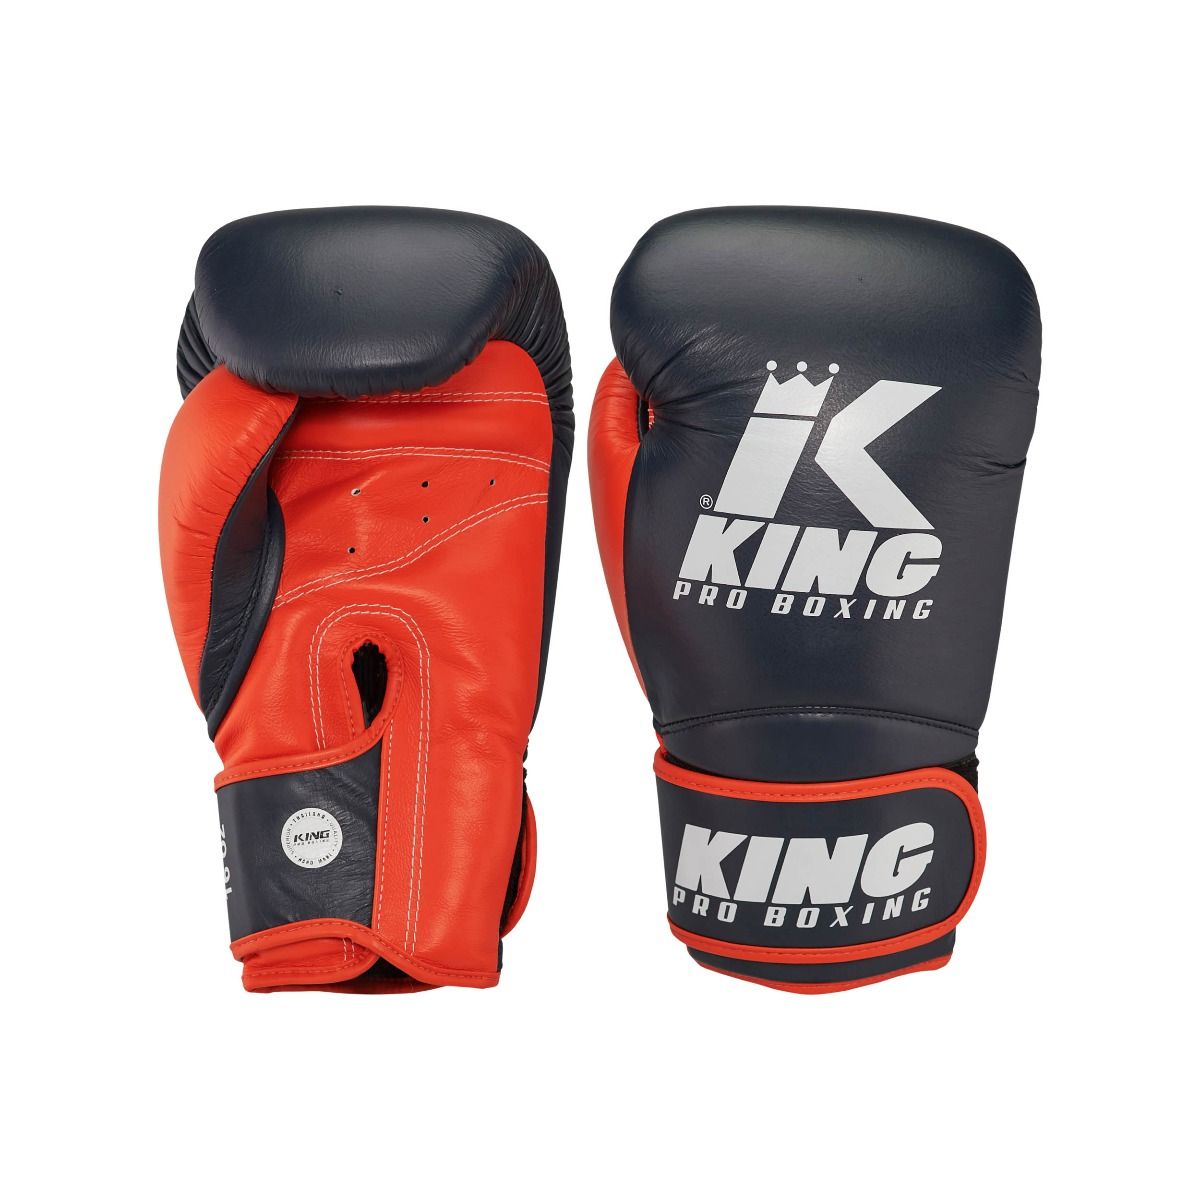 King Pro Boxing - Bokshandschoenen - STAR 15 - Zwart - Oranje